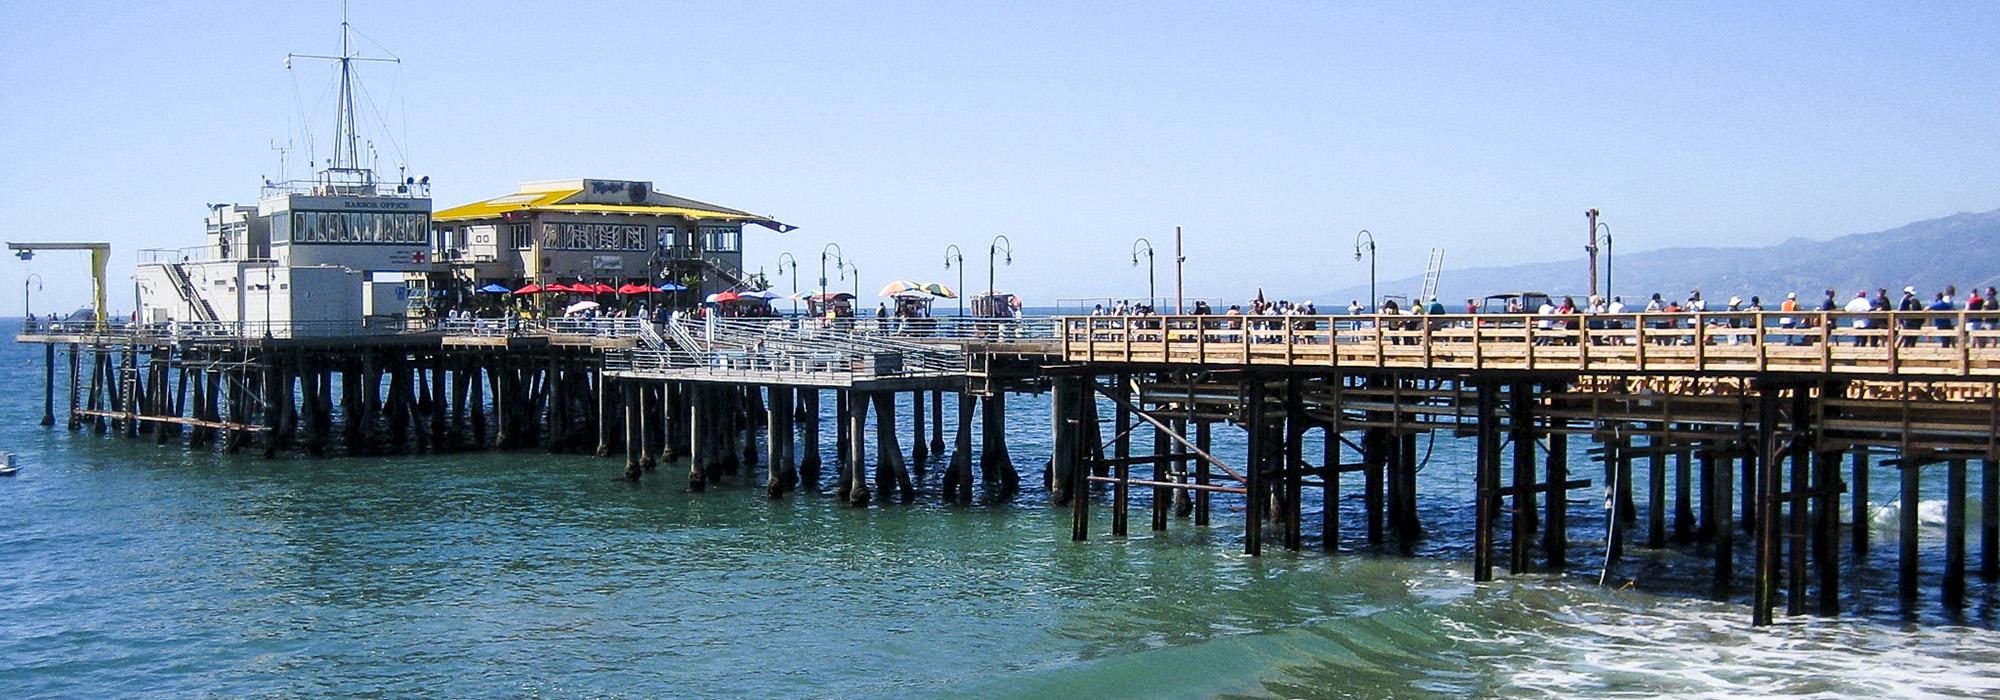 Santa Monica Pier and Carousel Park, CA